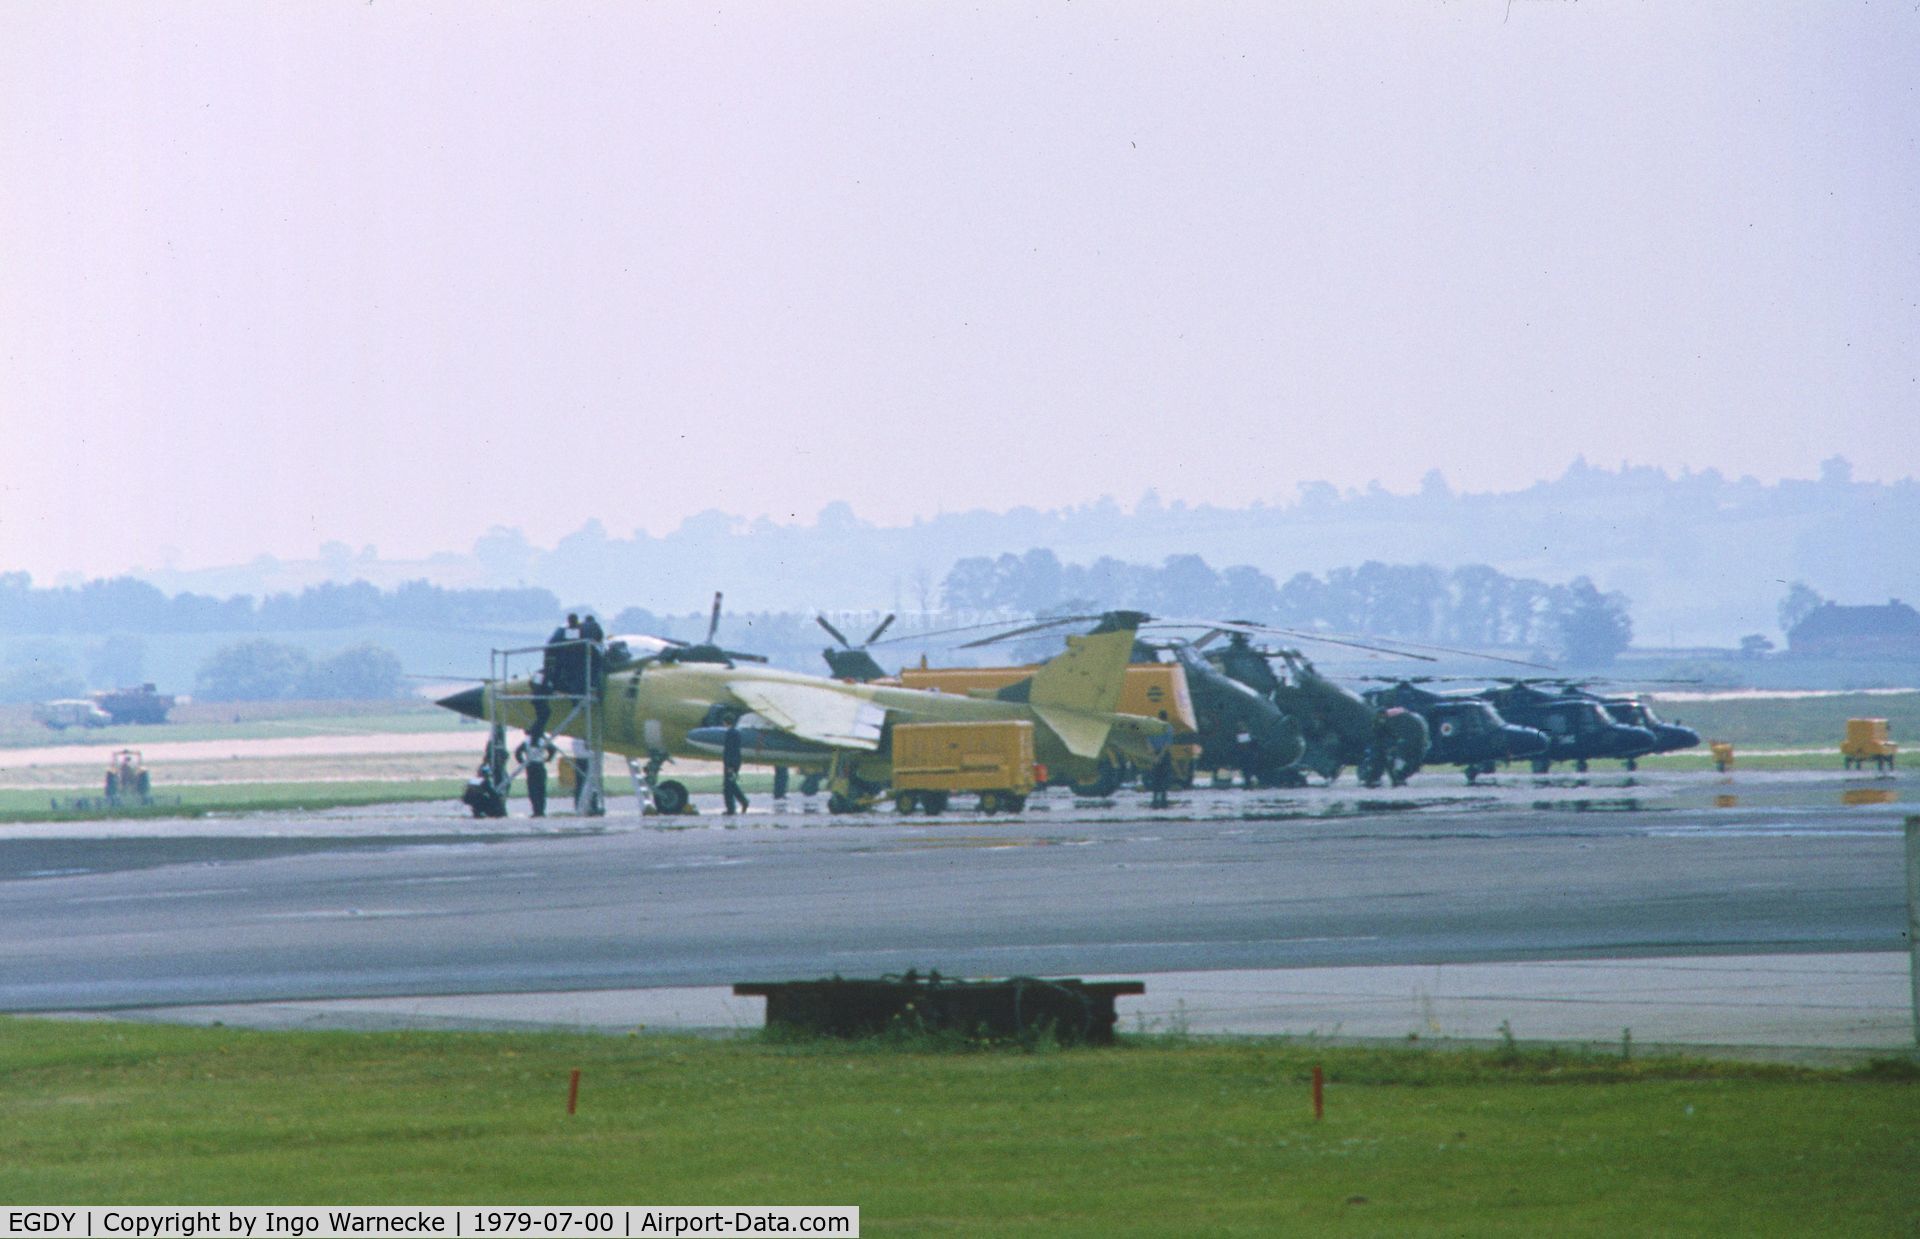 RNAS Yeovilton Airport, Yeovil, England United Kingdom (EGDY) - apron at RNAS Yeovilton with Sea Harrier, Wessex and Lynx